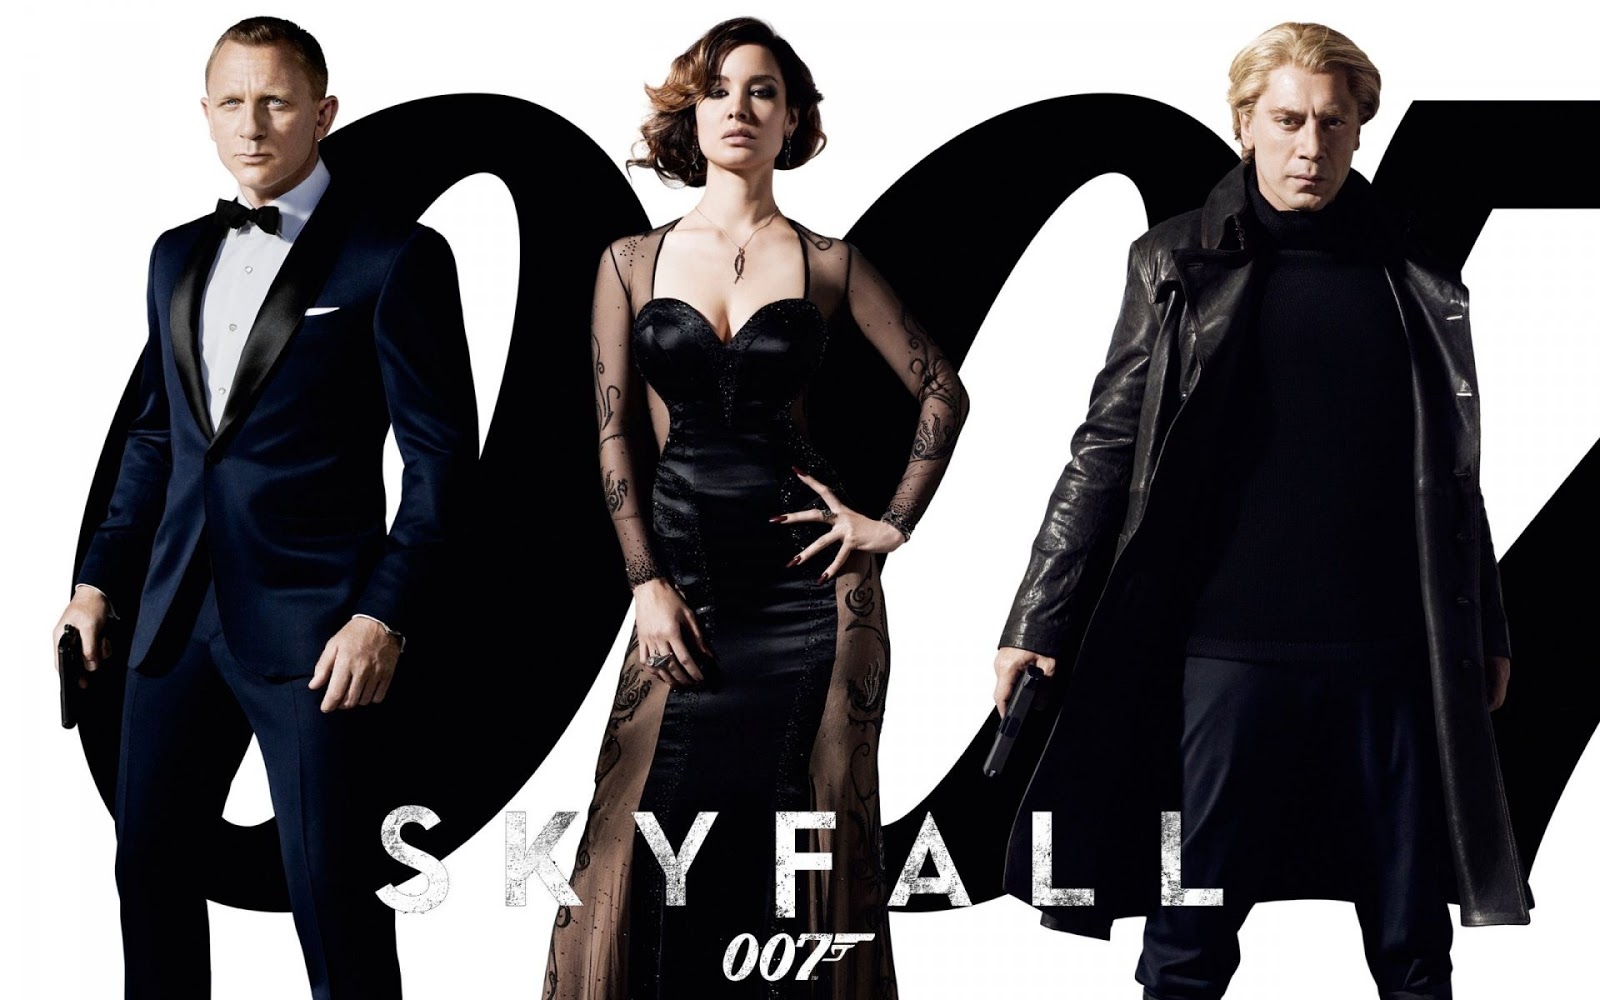 007 wallpaper,fashion,formal wear,gothic fashion,little black dress,suit